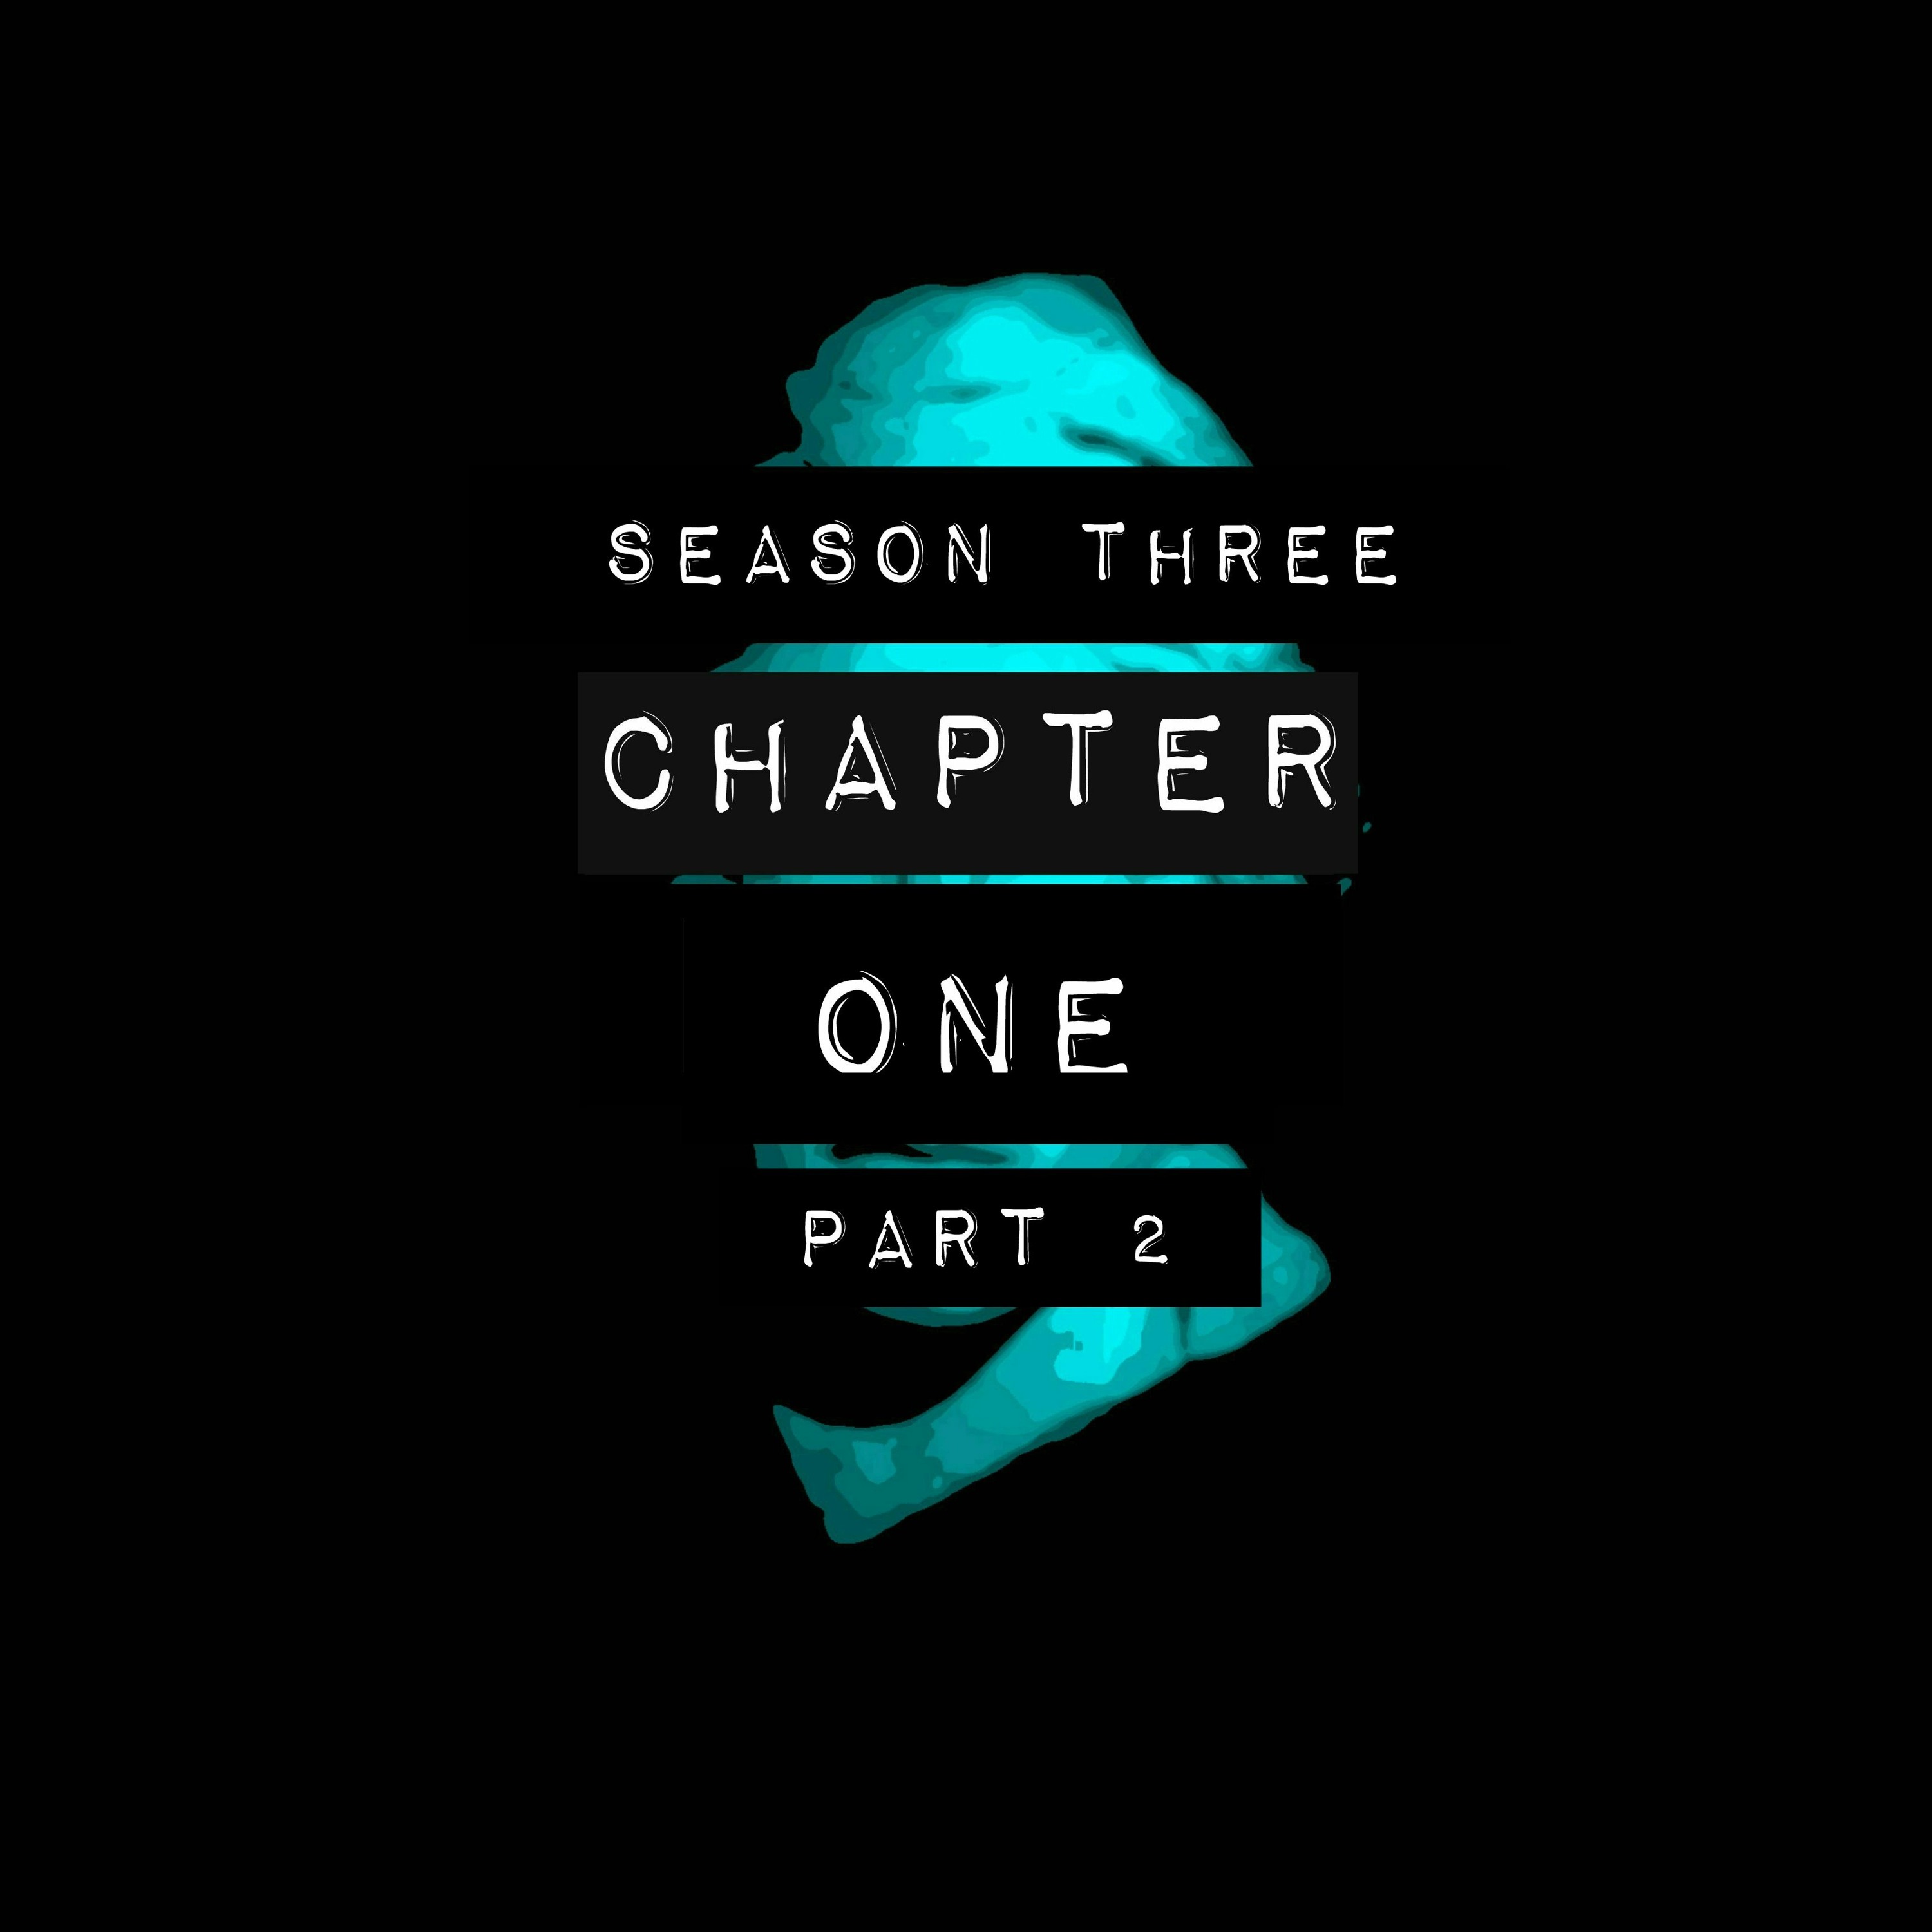 PART 2- Season 3, Chapter 1